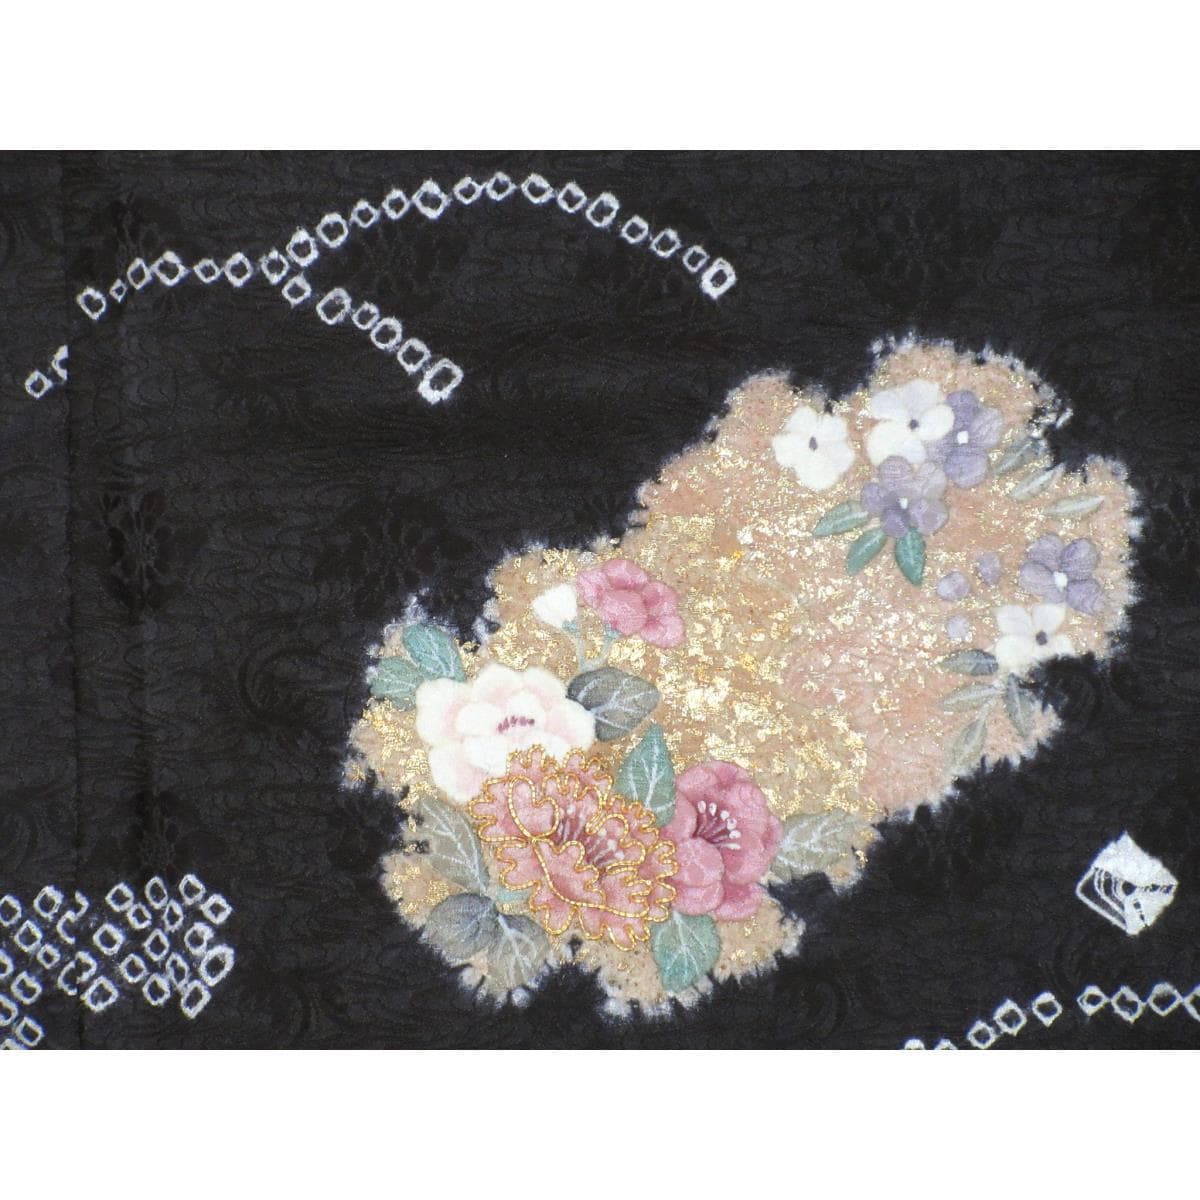 [Unused items] Visiting Kimono with Yuzen Gold Coloring and Shibori Embroidery